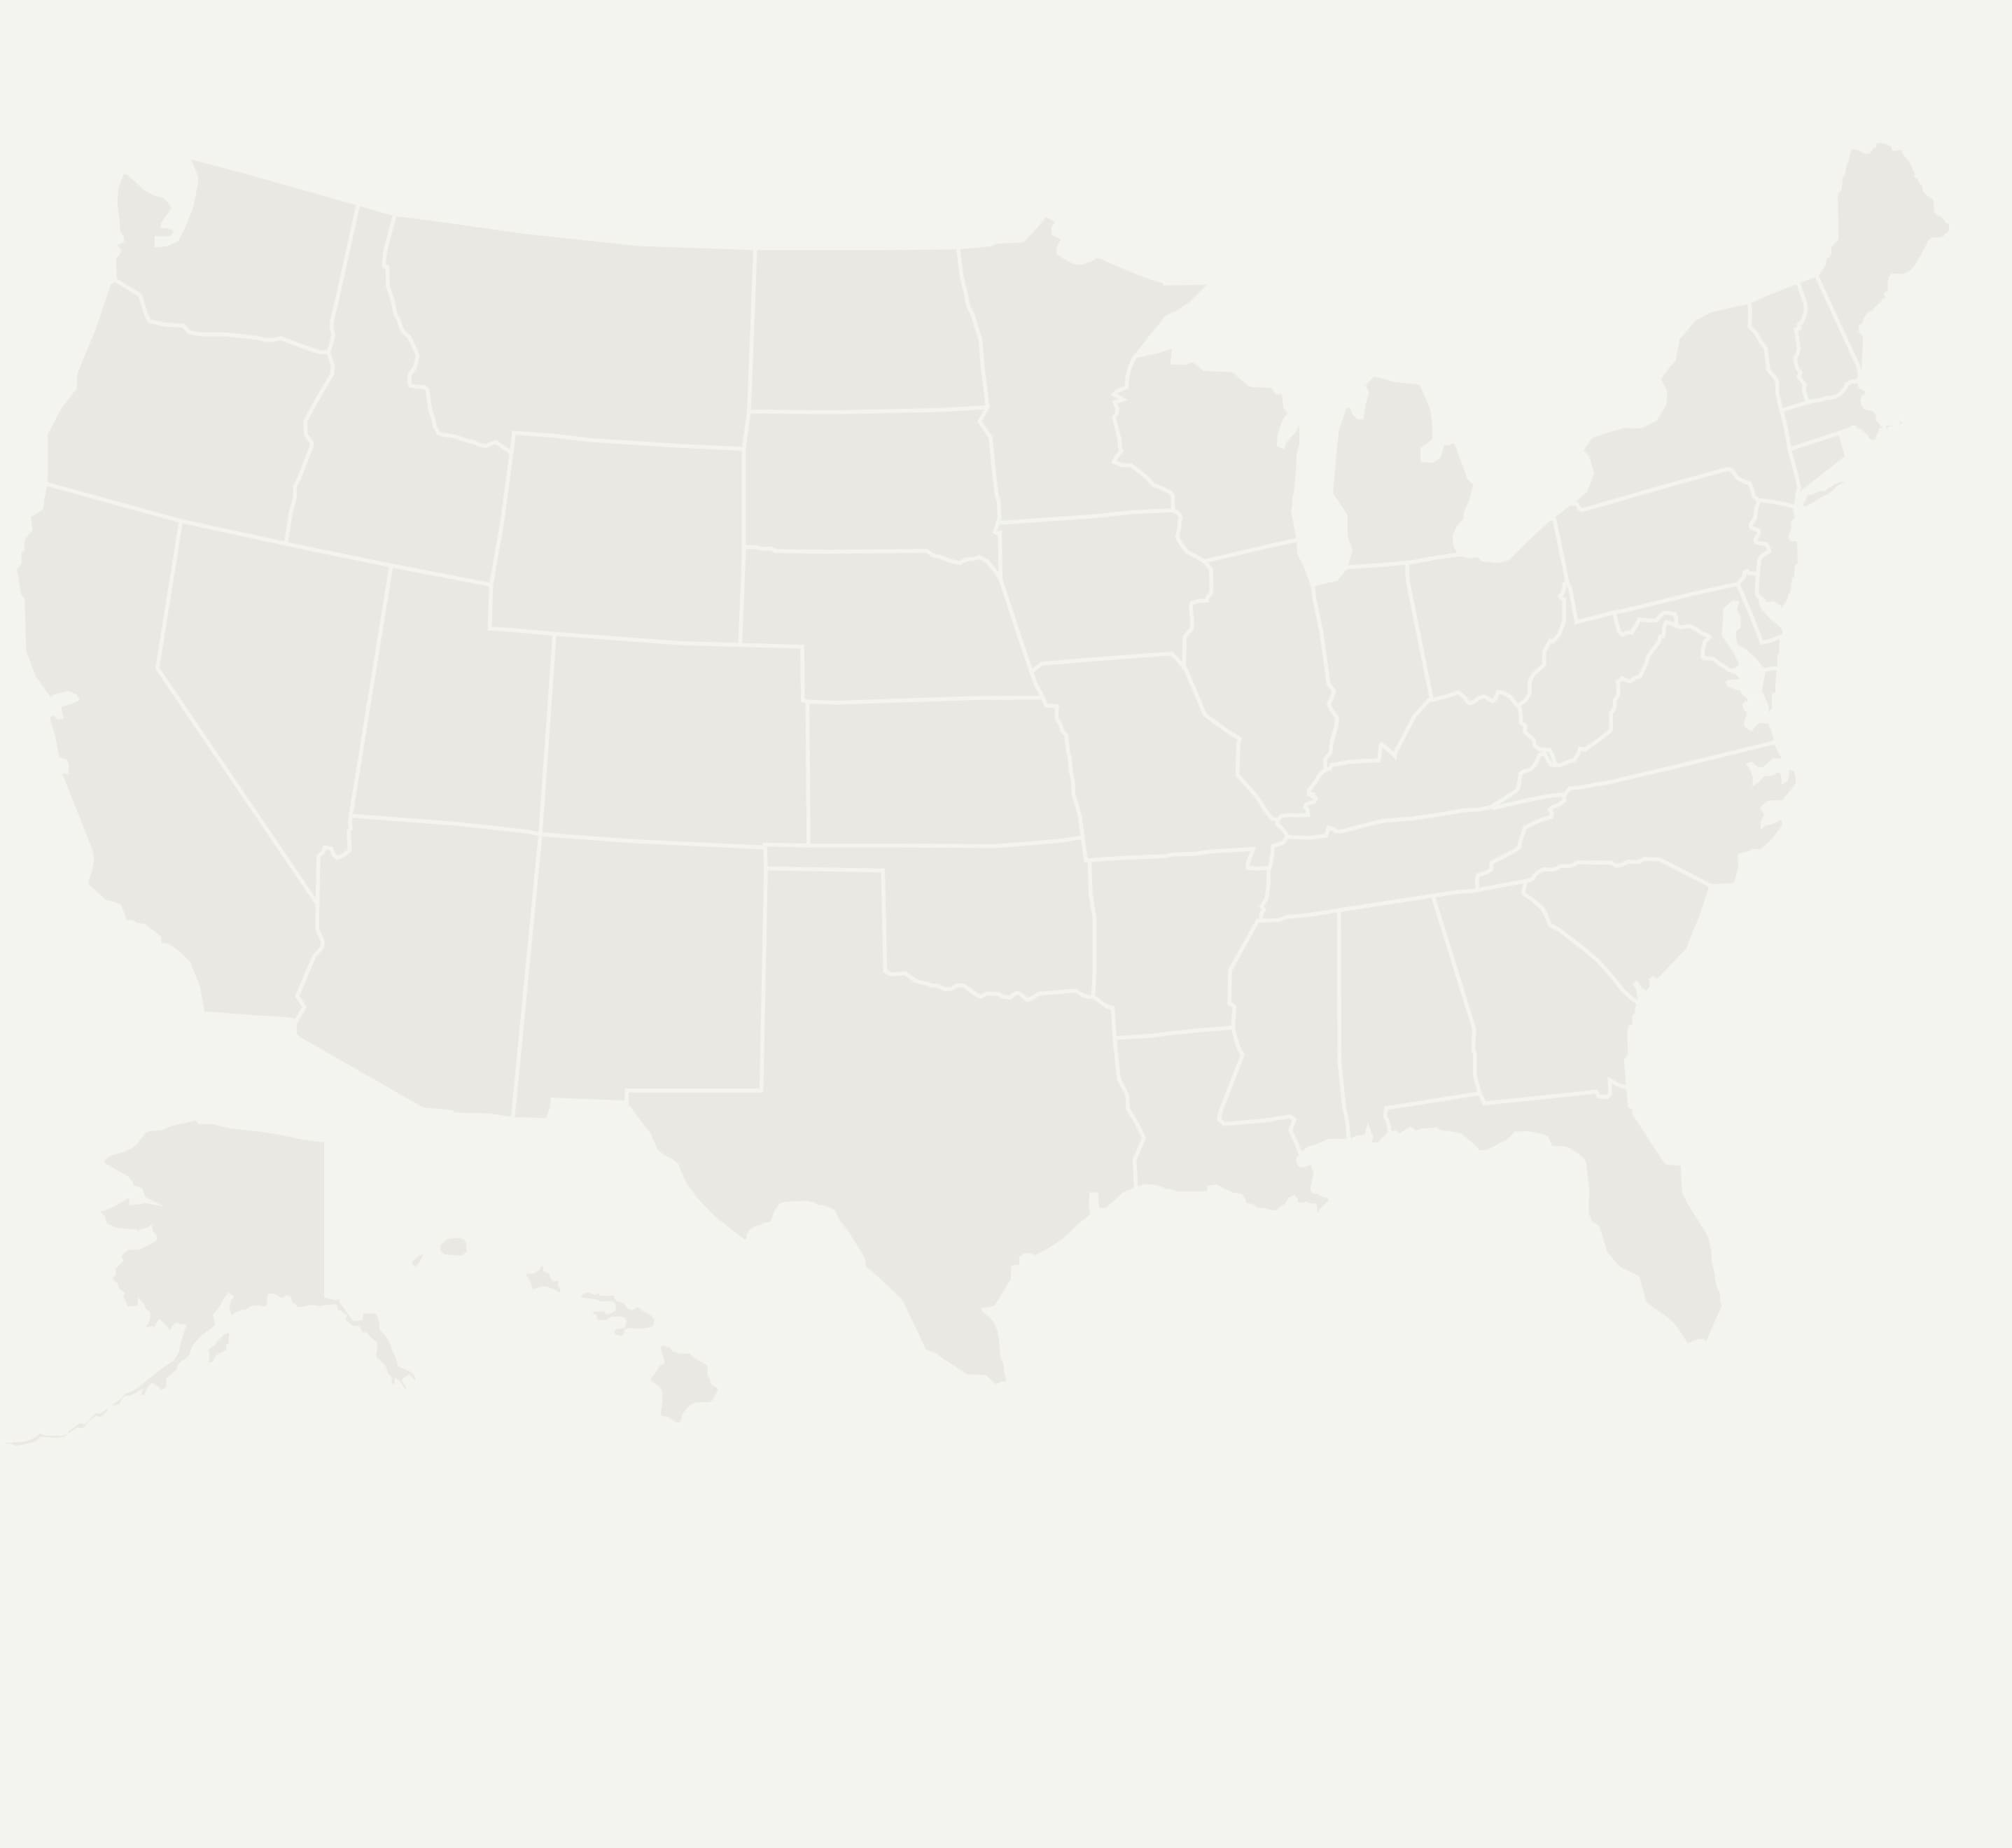 Background image of USA map.